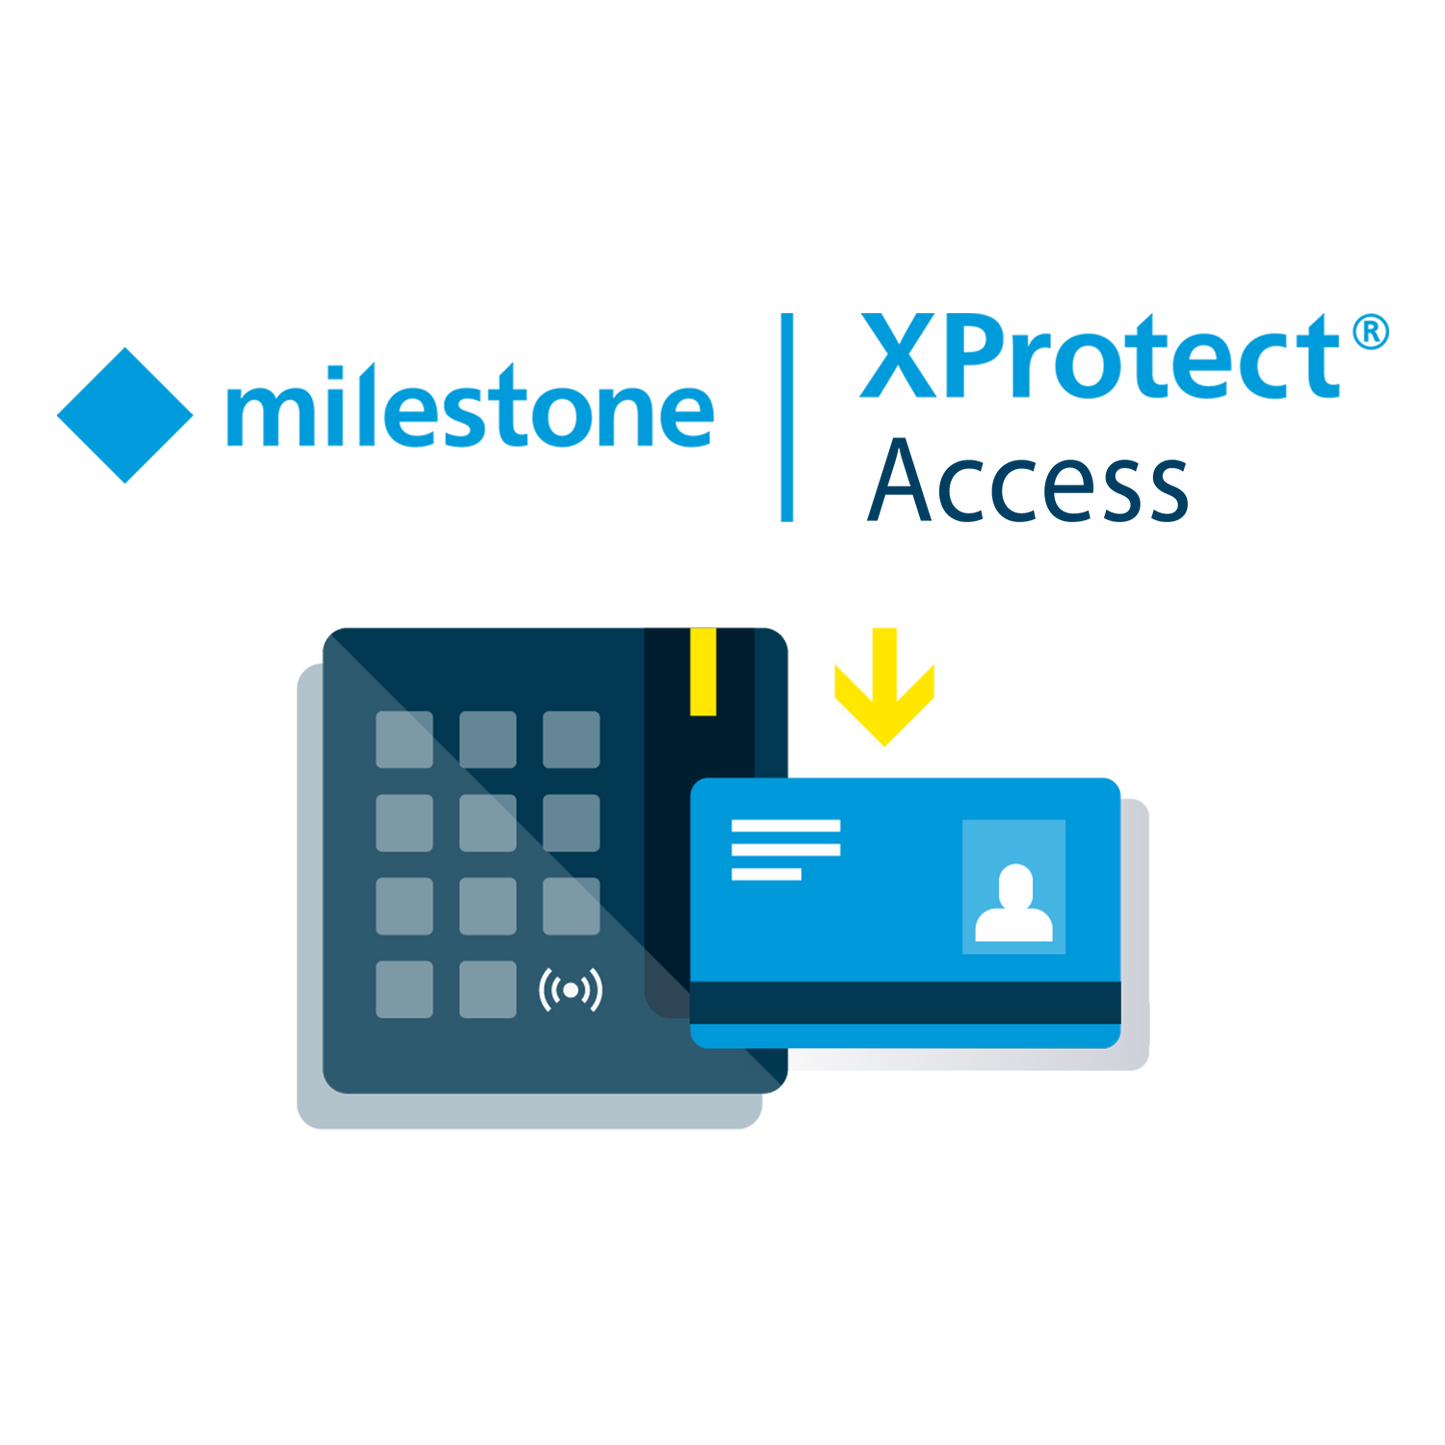 Milestone XProtect LPR / Retail / Access / Transact / Screen Recorder / Rapid REVIEW